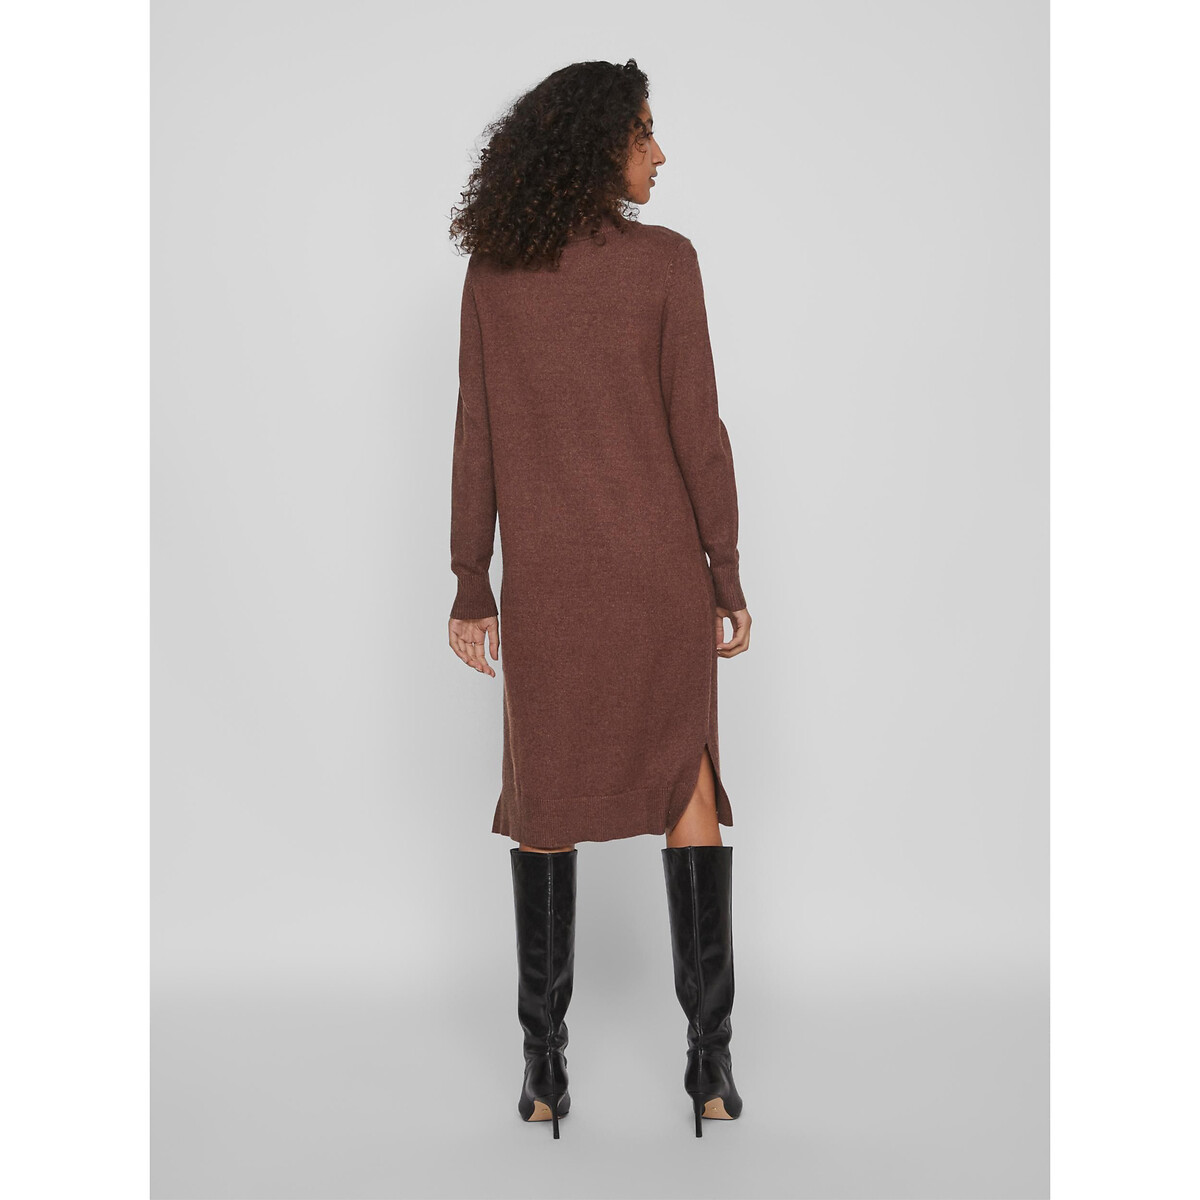 Платье-пуловер Миди из тонкого трикотажа воротник-стойка S каштановый LaRedoute, размер S - фото 5